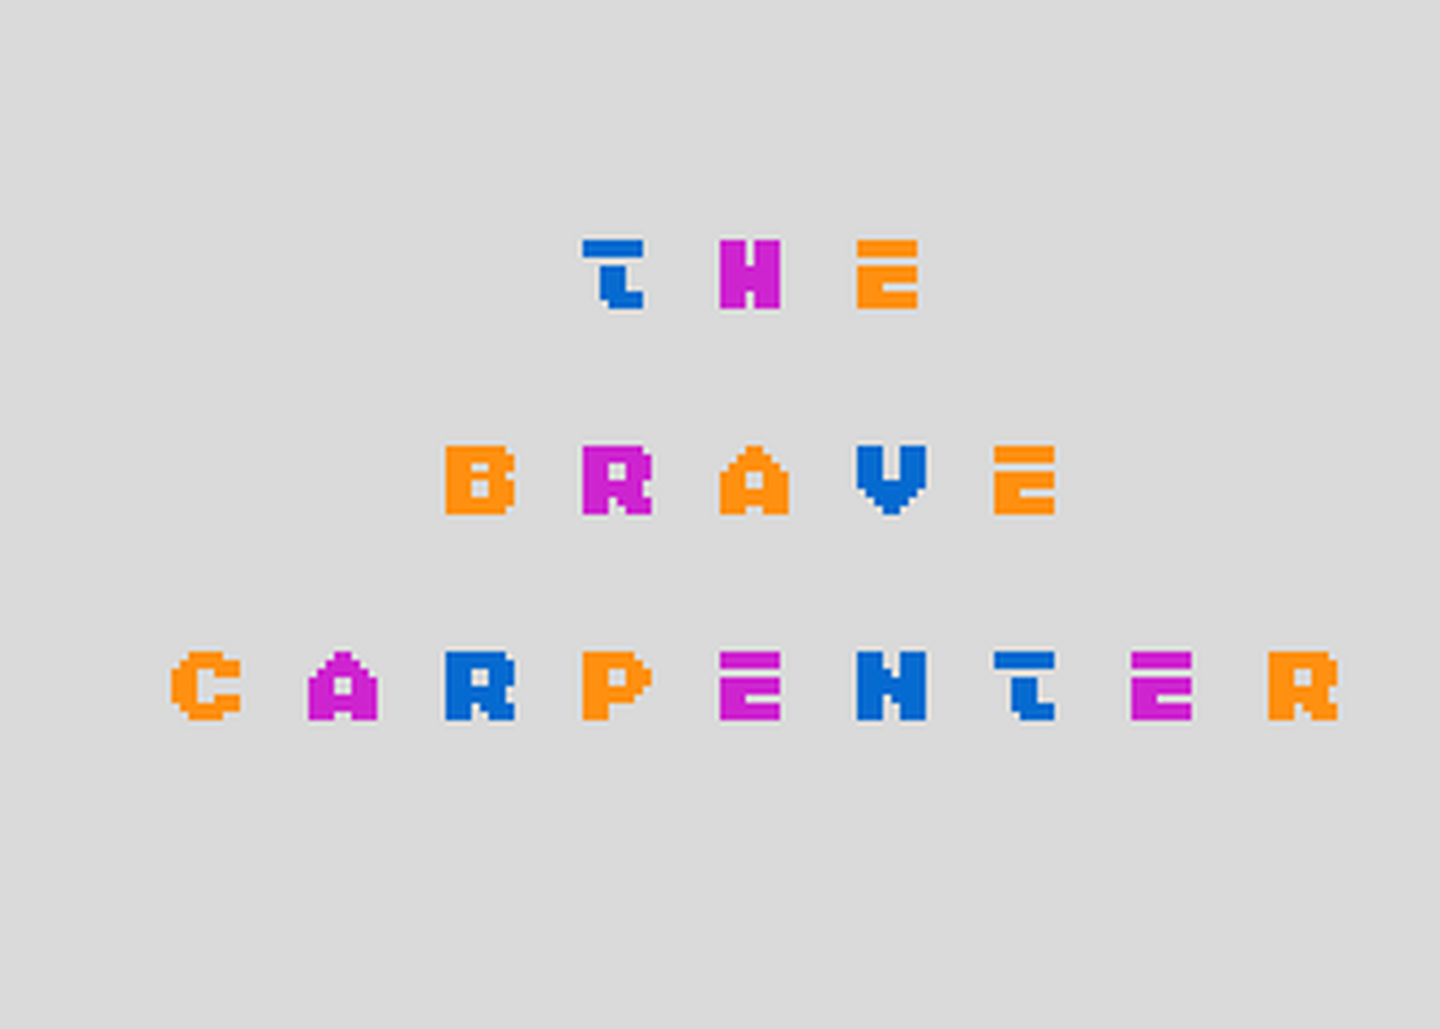 Atari GameBase Brave_Carpenter,_The (No_Publisher)